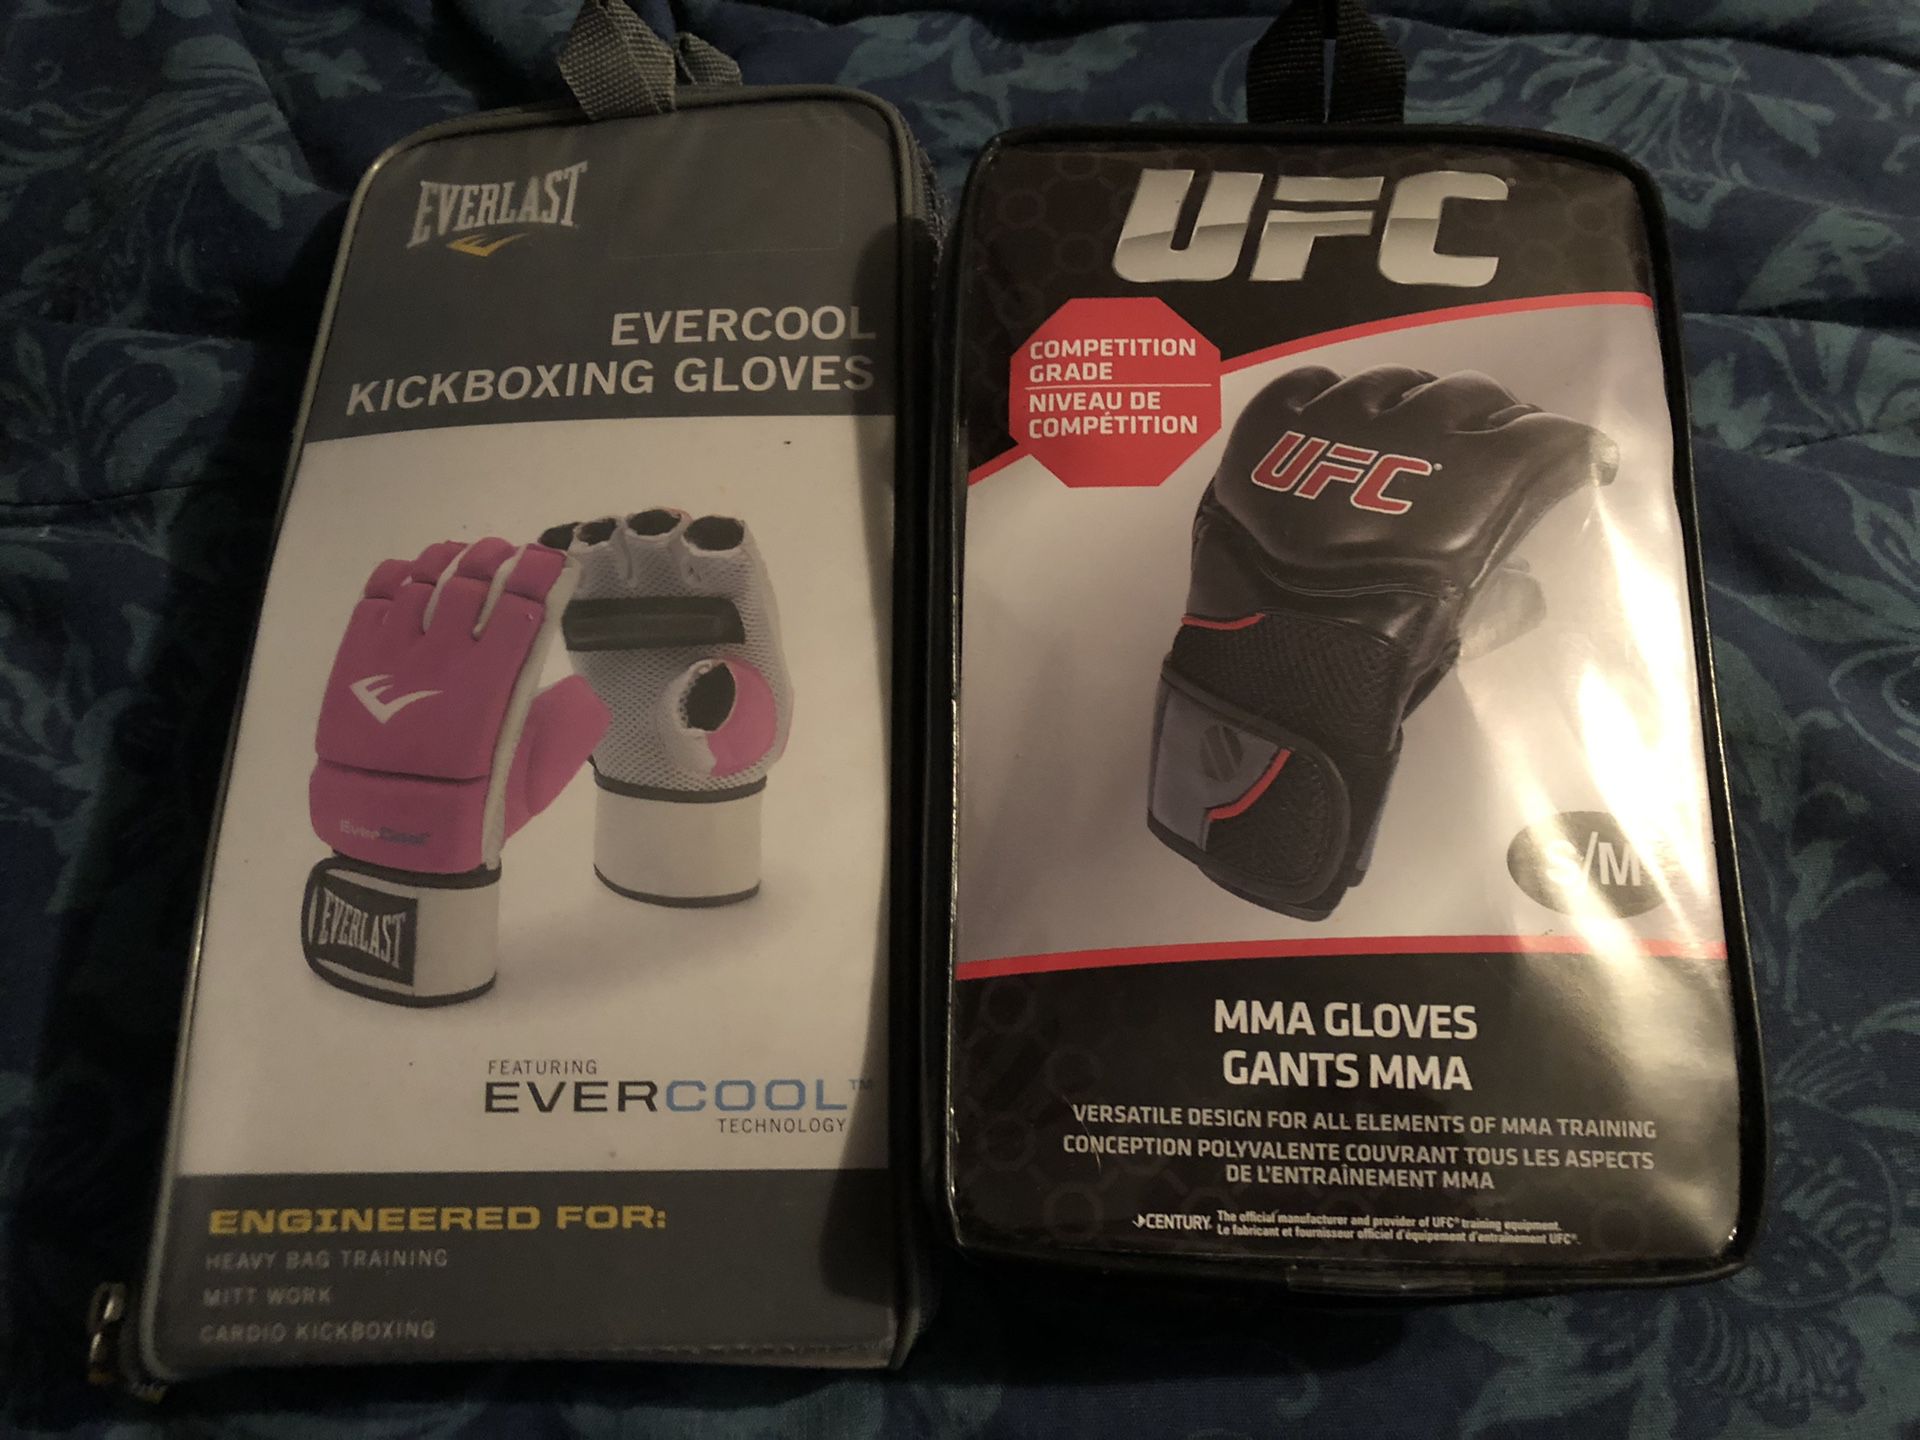 Kickboxing/MMA gloves